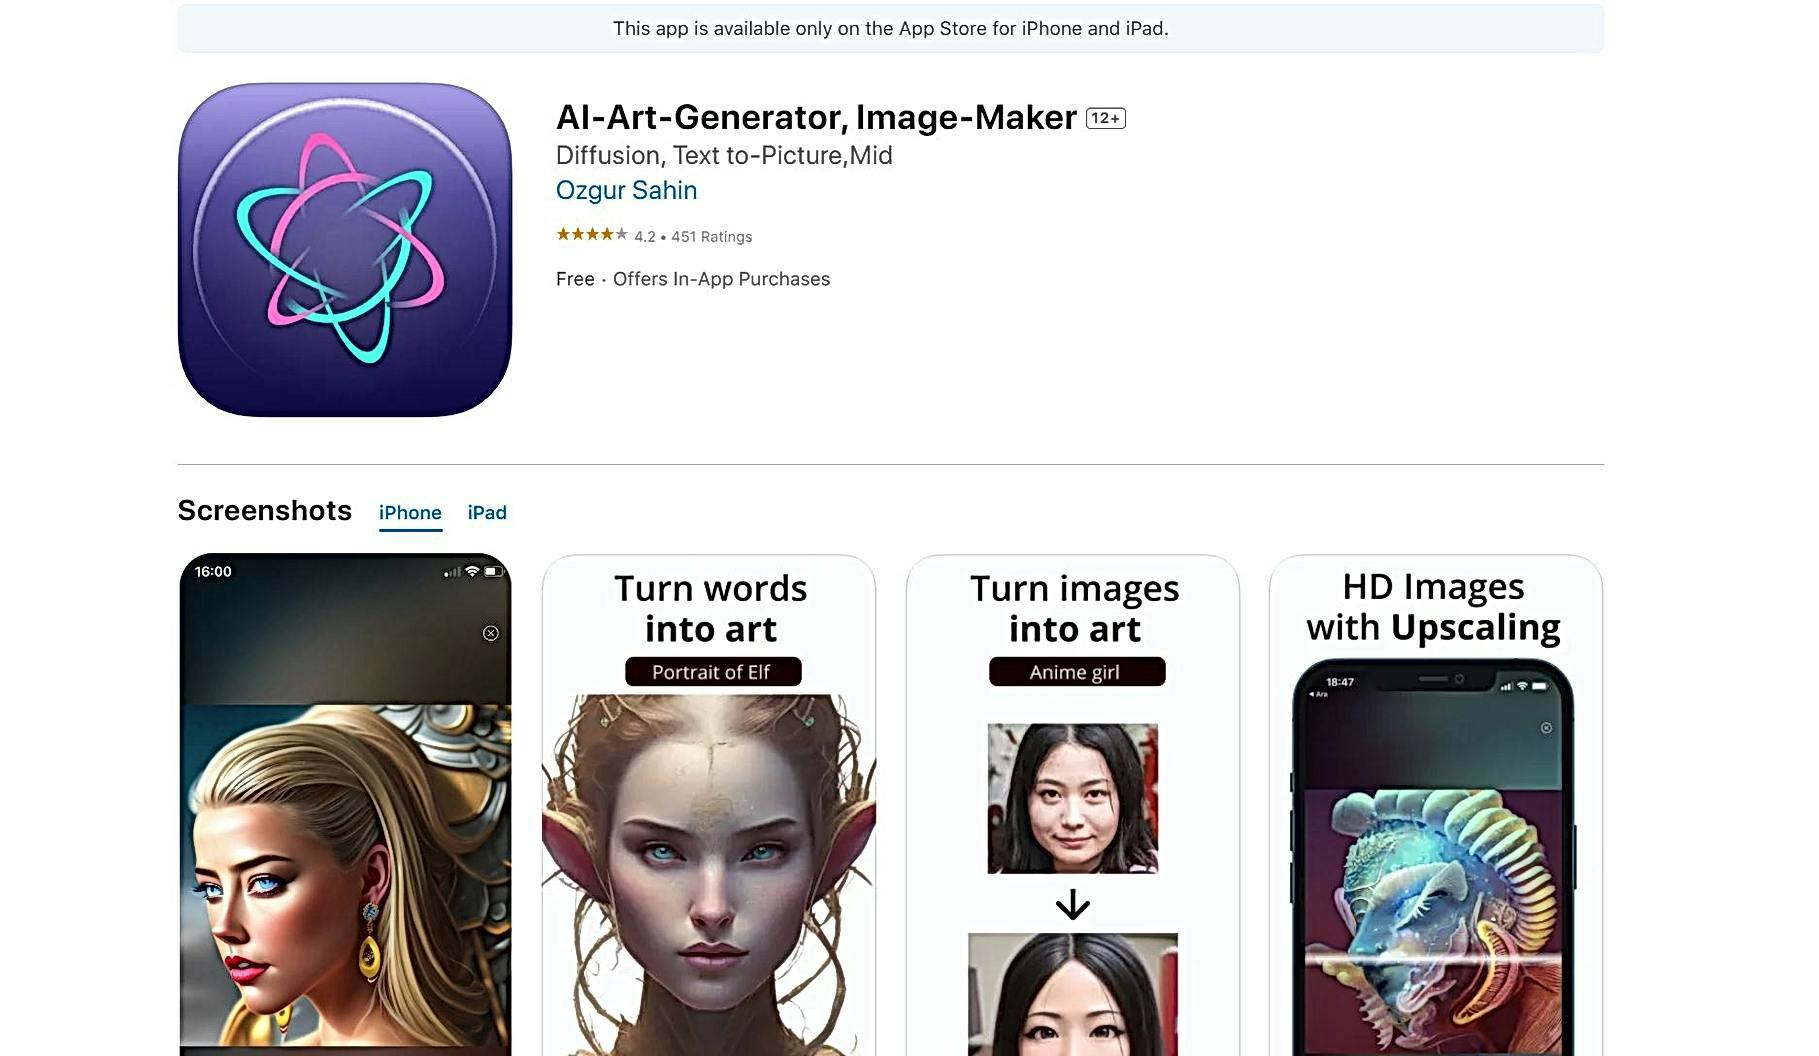 AI Art Generator | Image-Maker featured